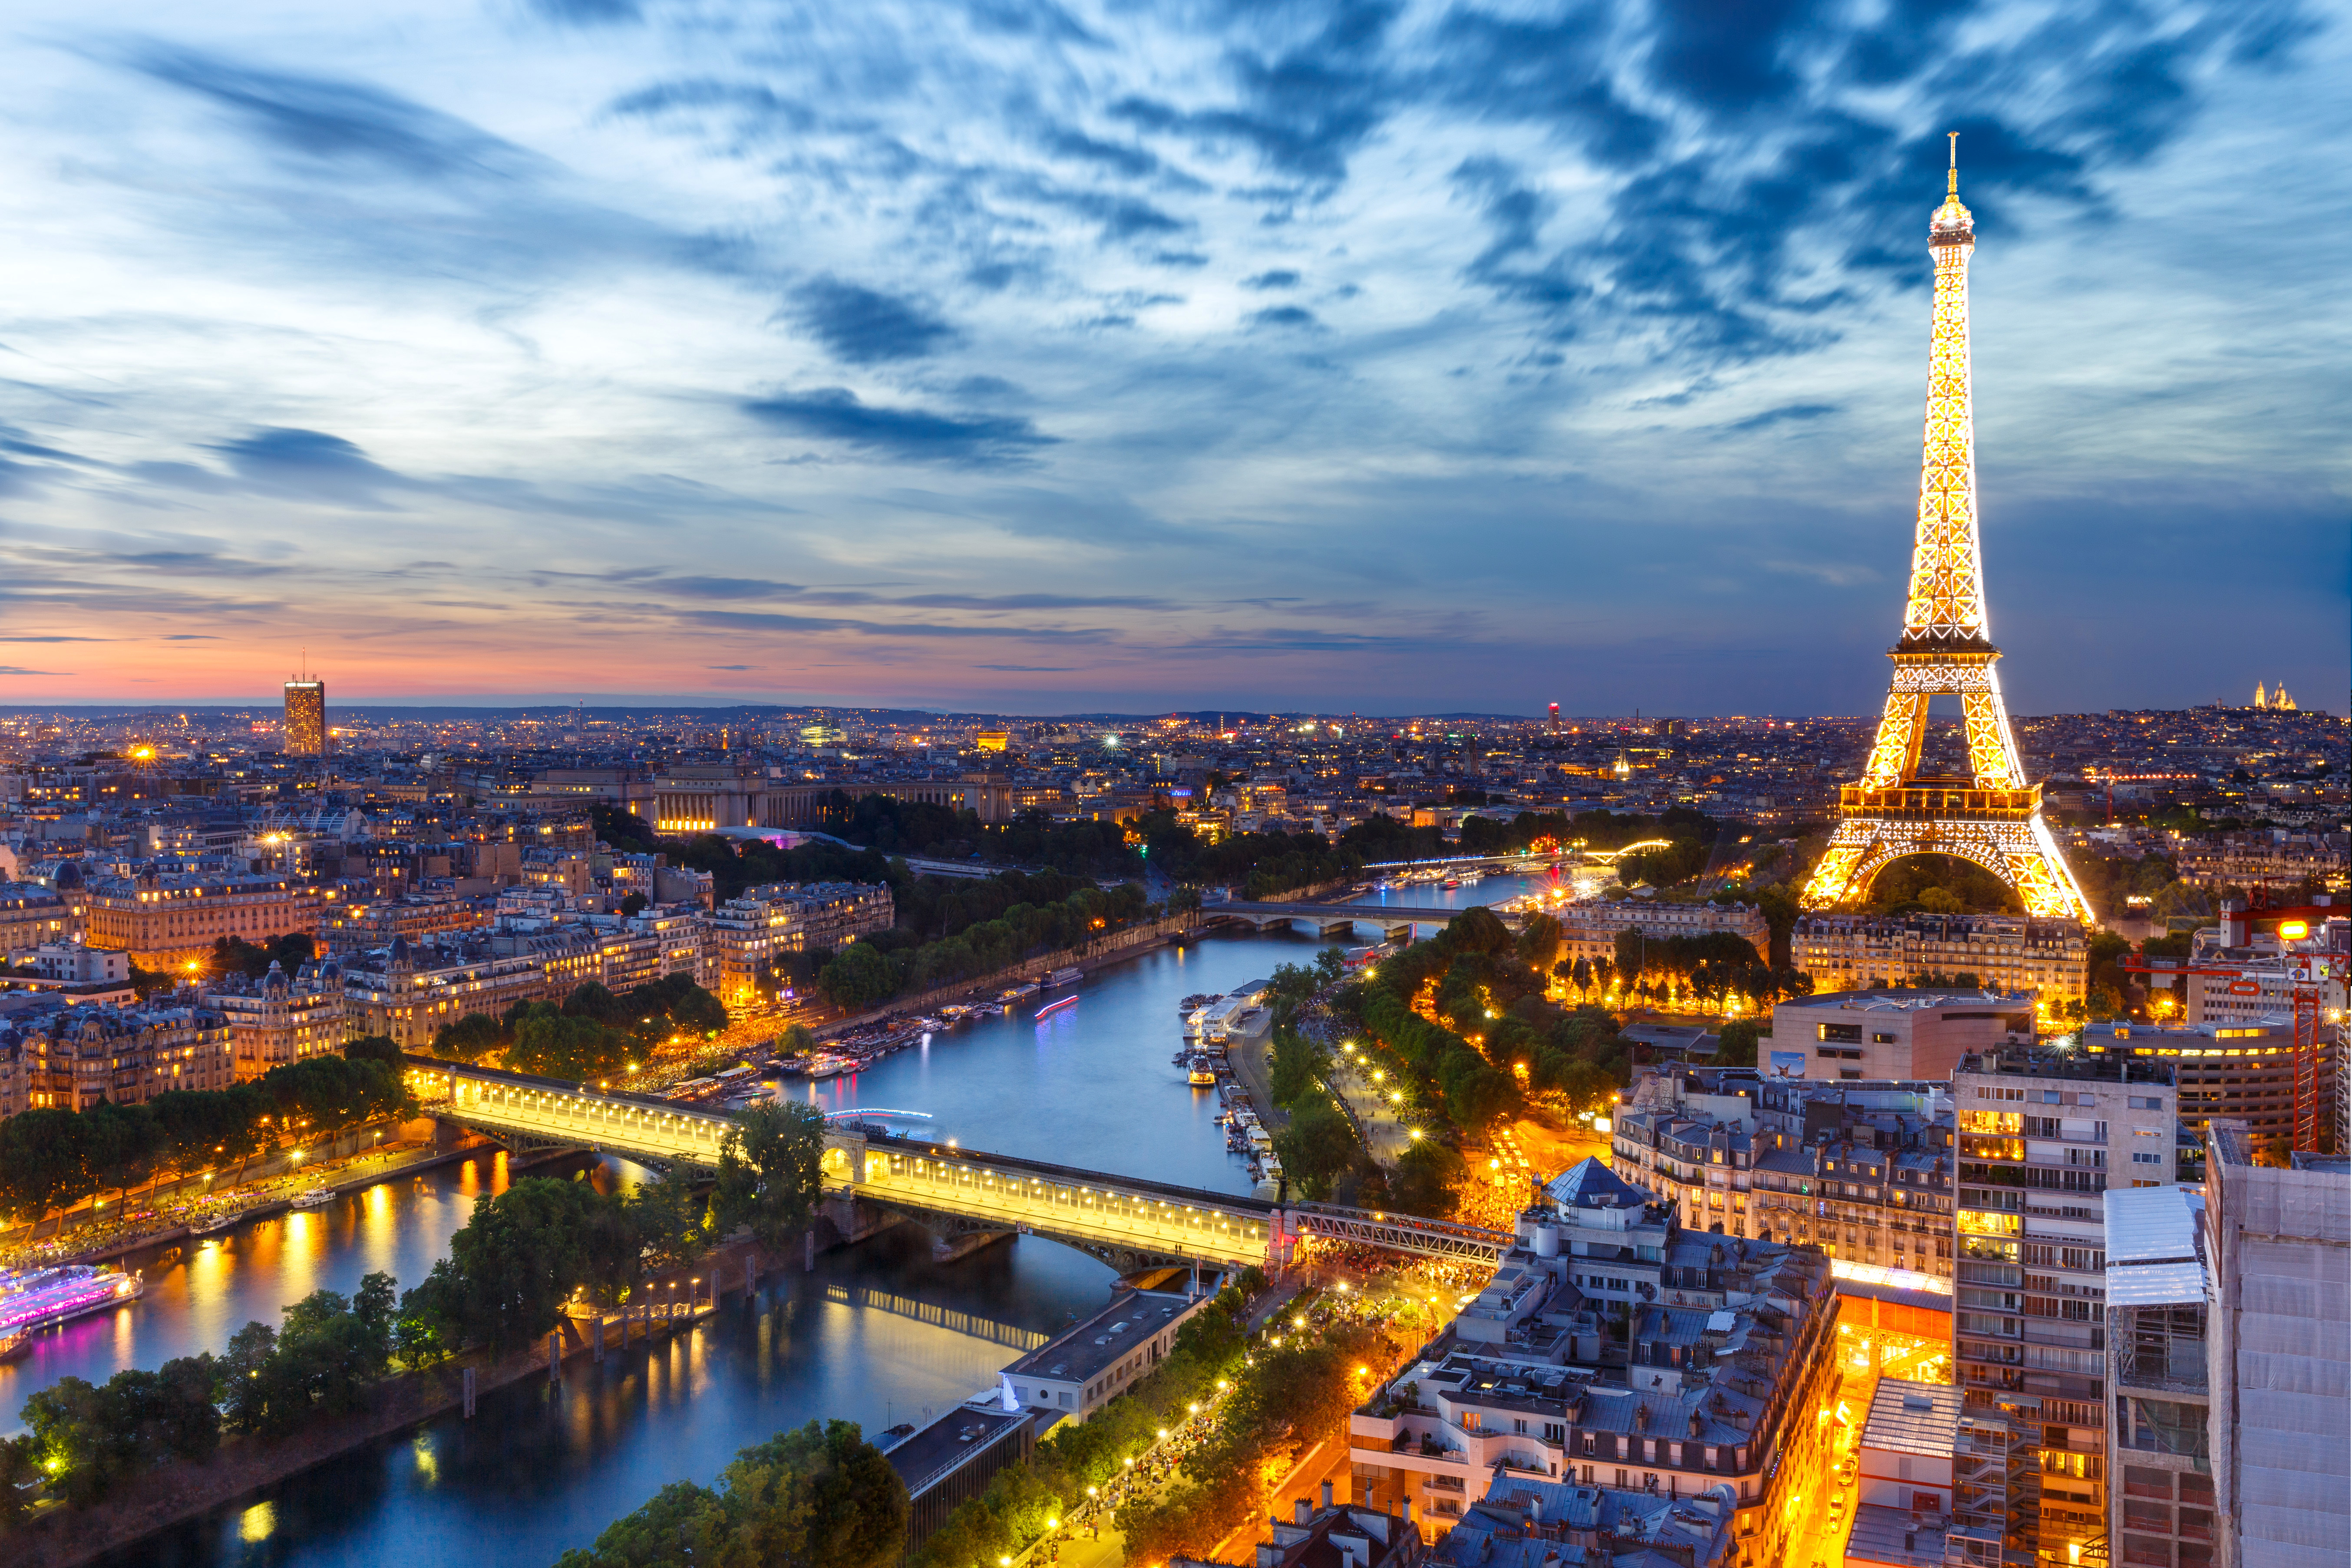 Время сейчас красивое. Франция Париж Эйфелева башня. Эйфелева башня в Париже ночью. Город Франция Эйфель башня. Париж Эйфель панорама.